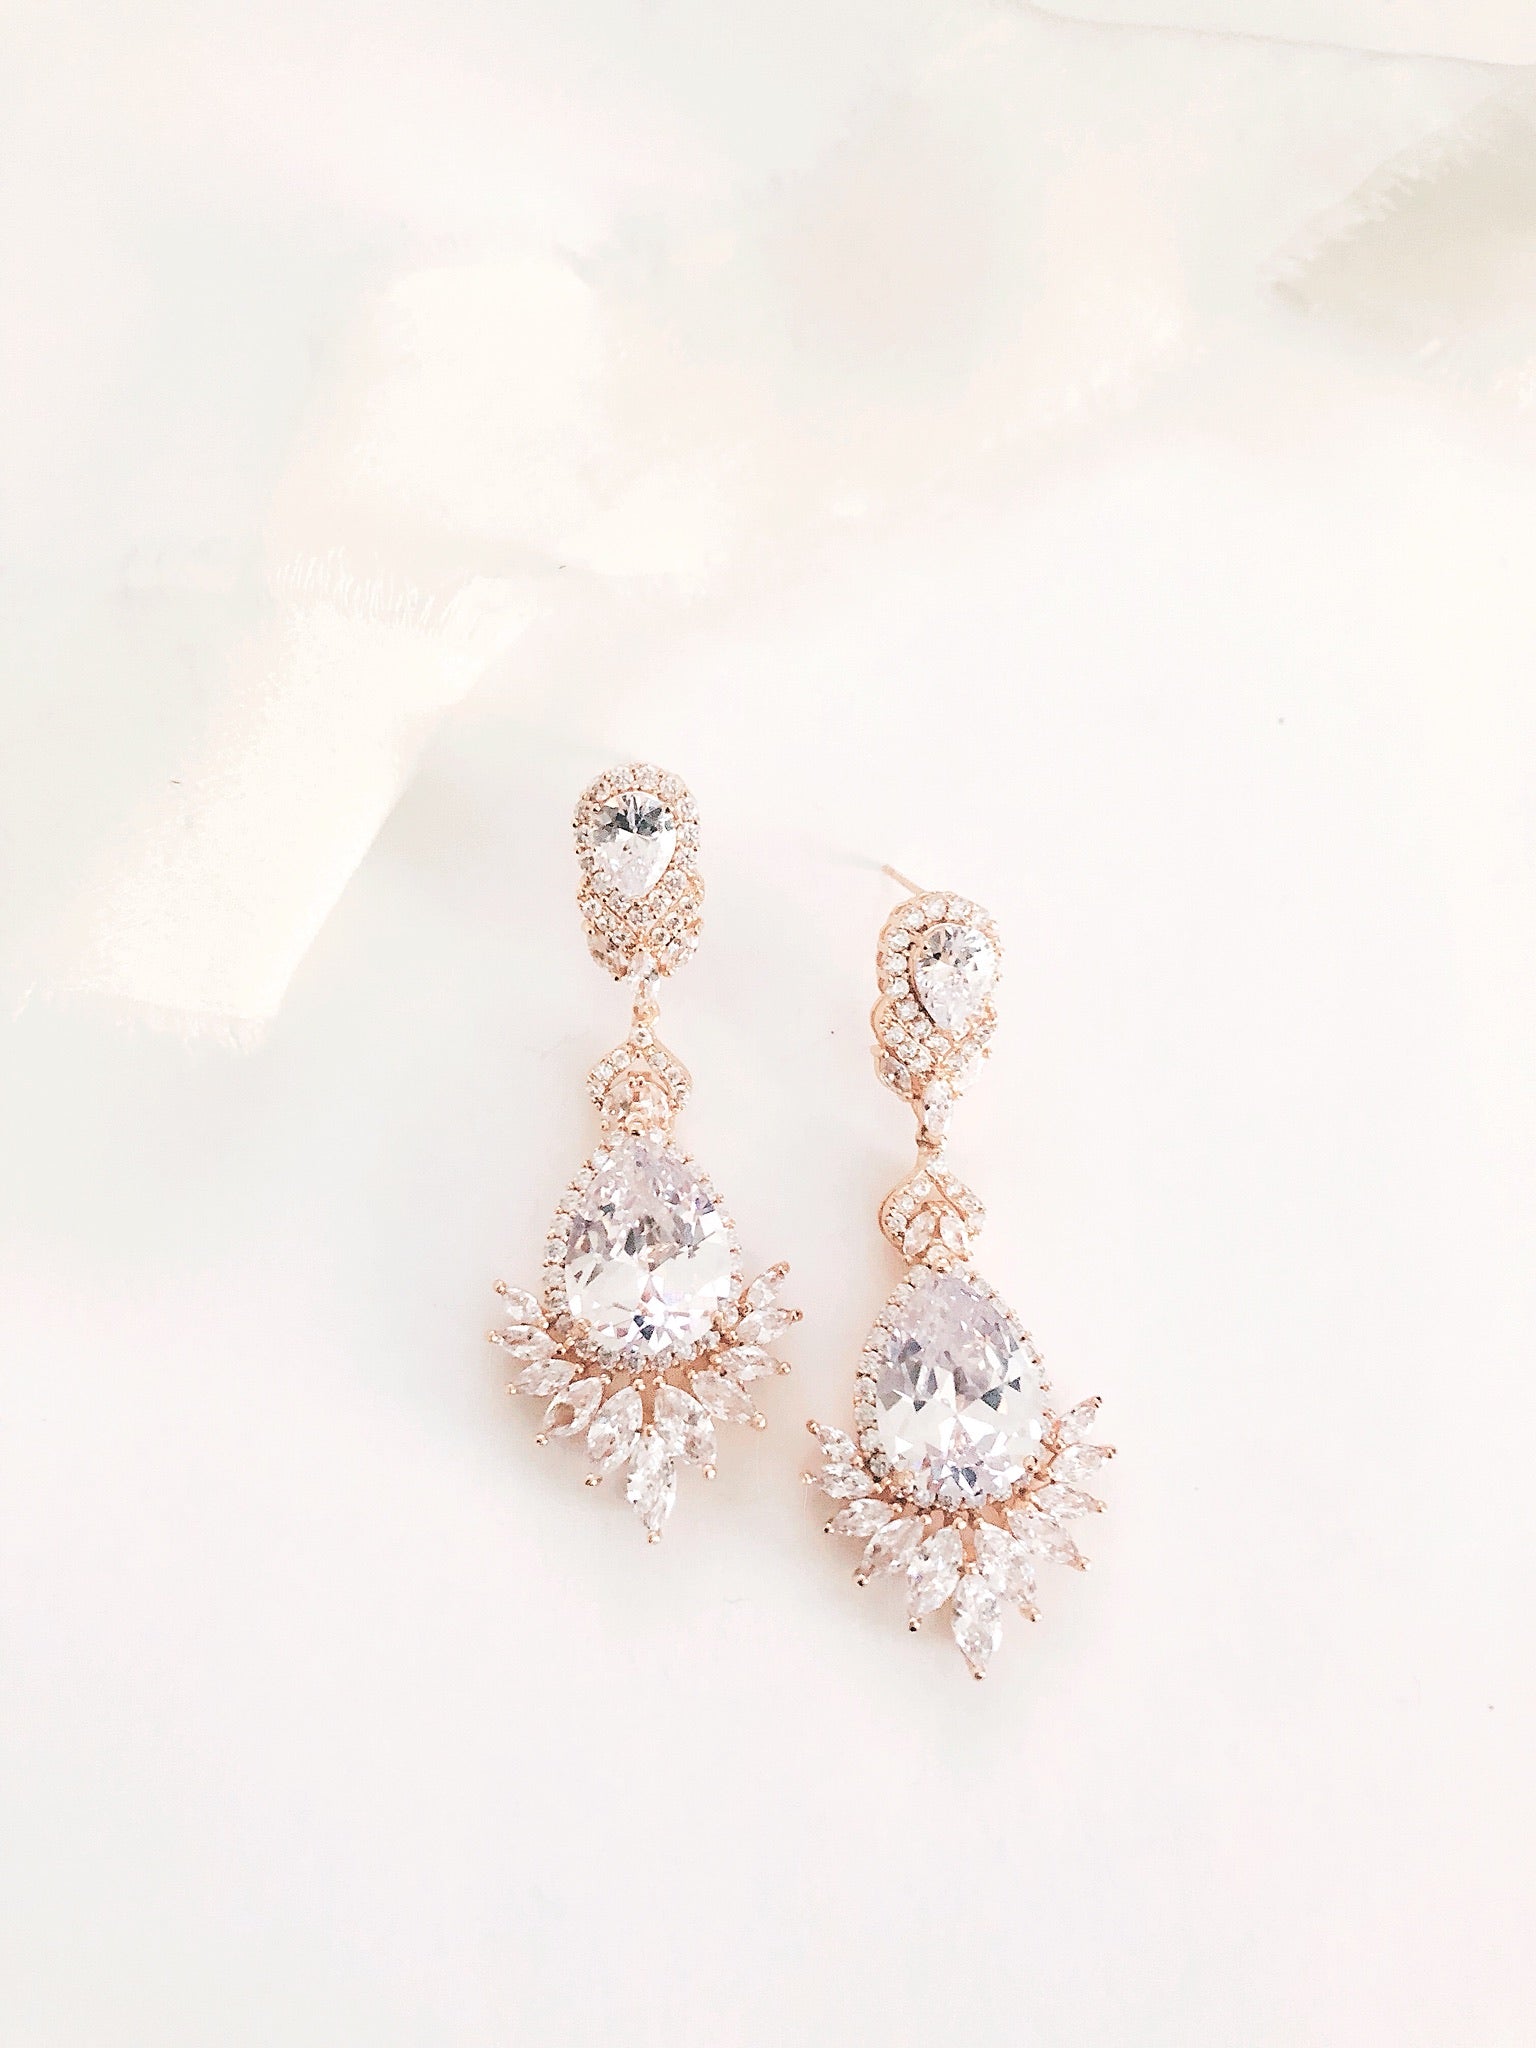 Priscilla Long Rose Gold Diamond Statement Wedding Earrings